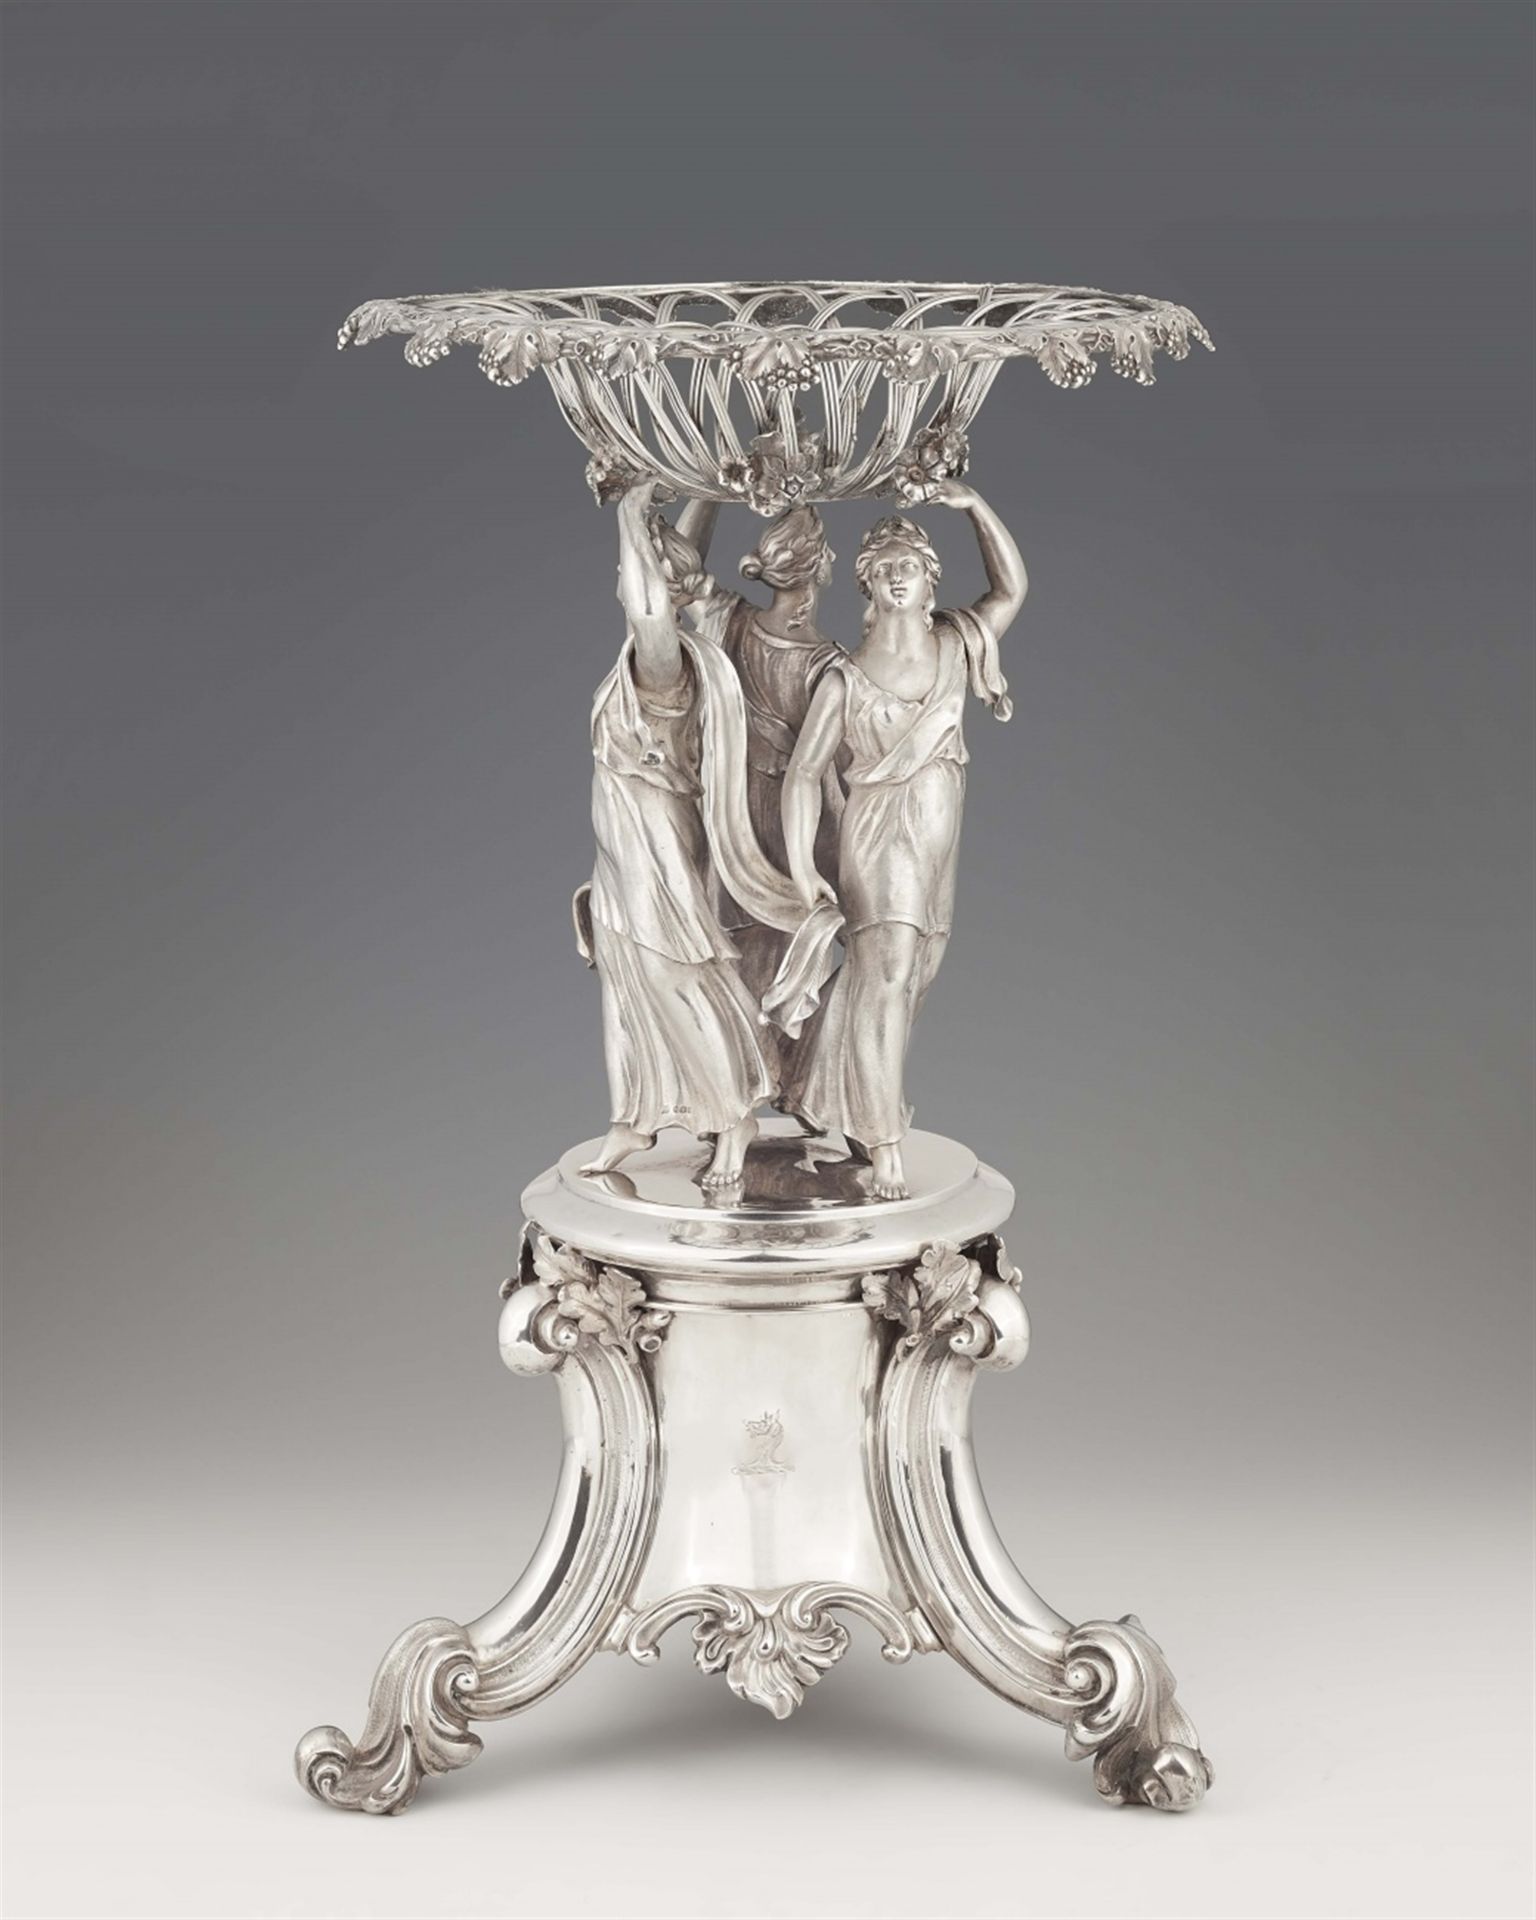 A large Victorian silver centerpiece